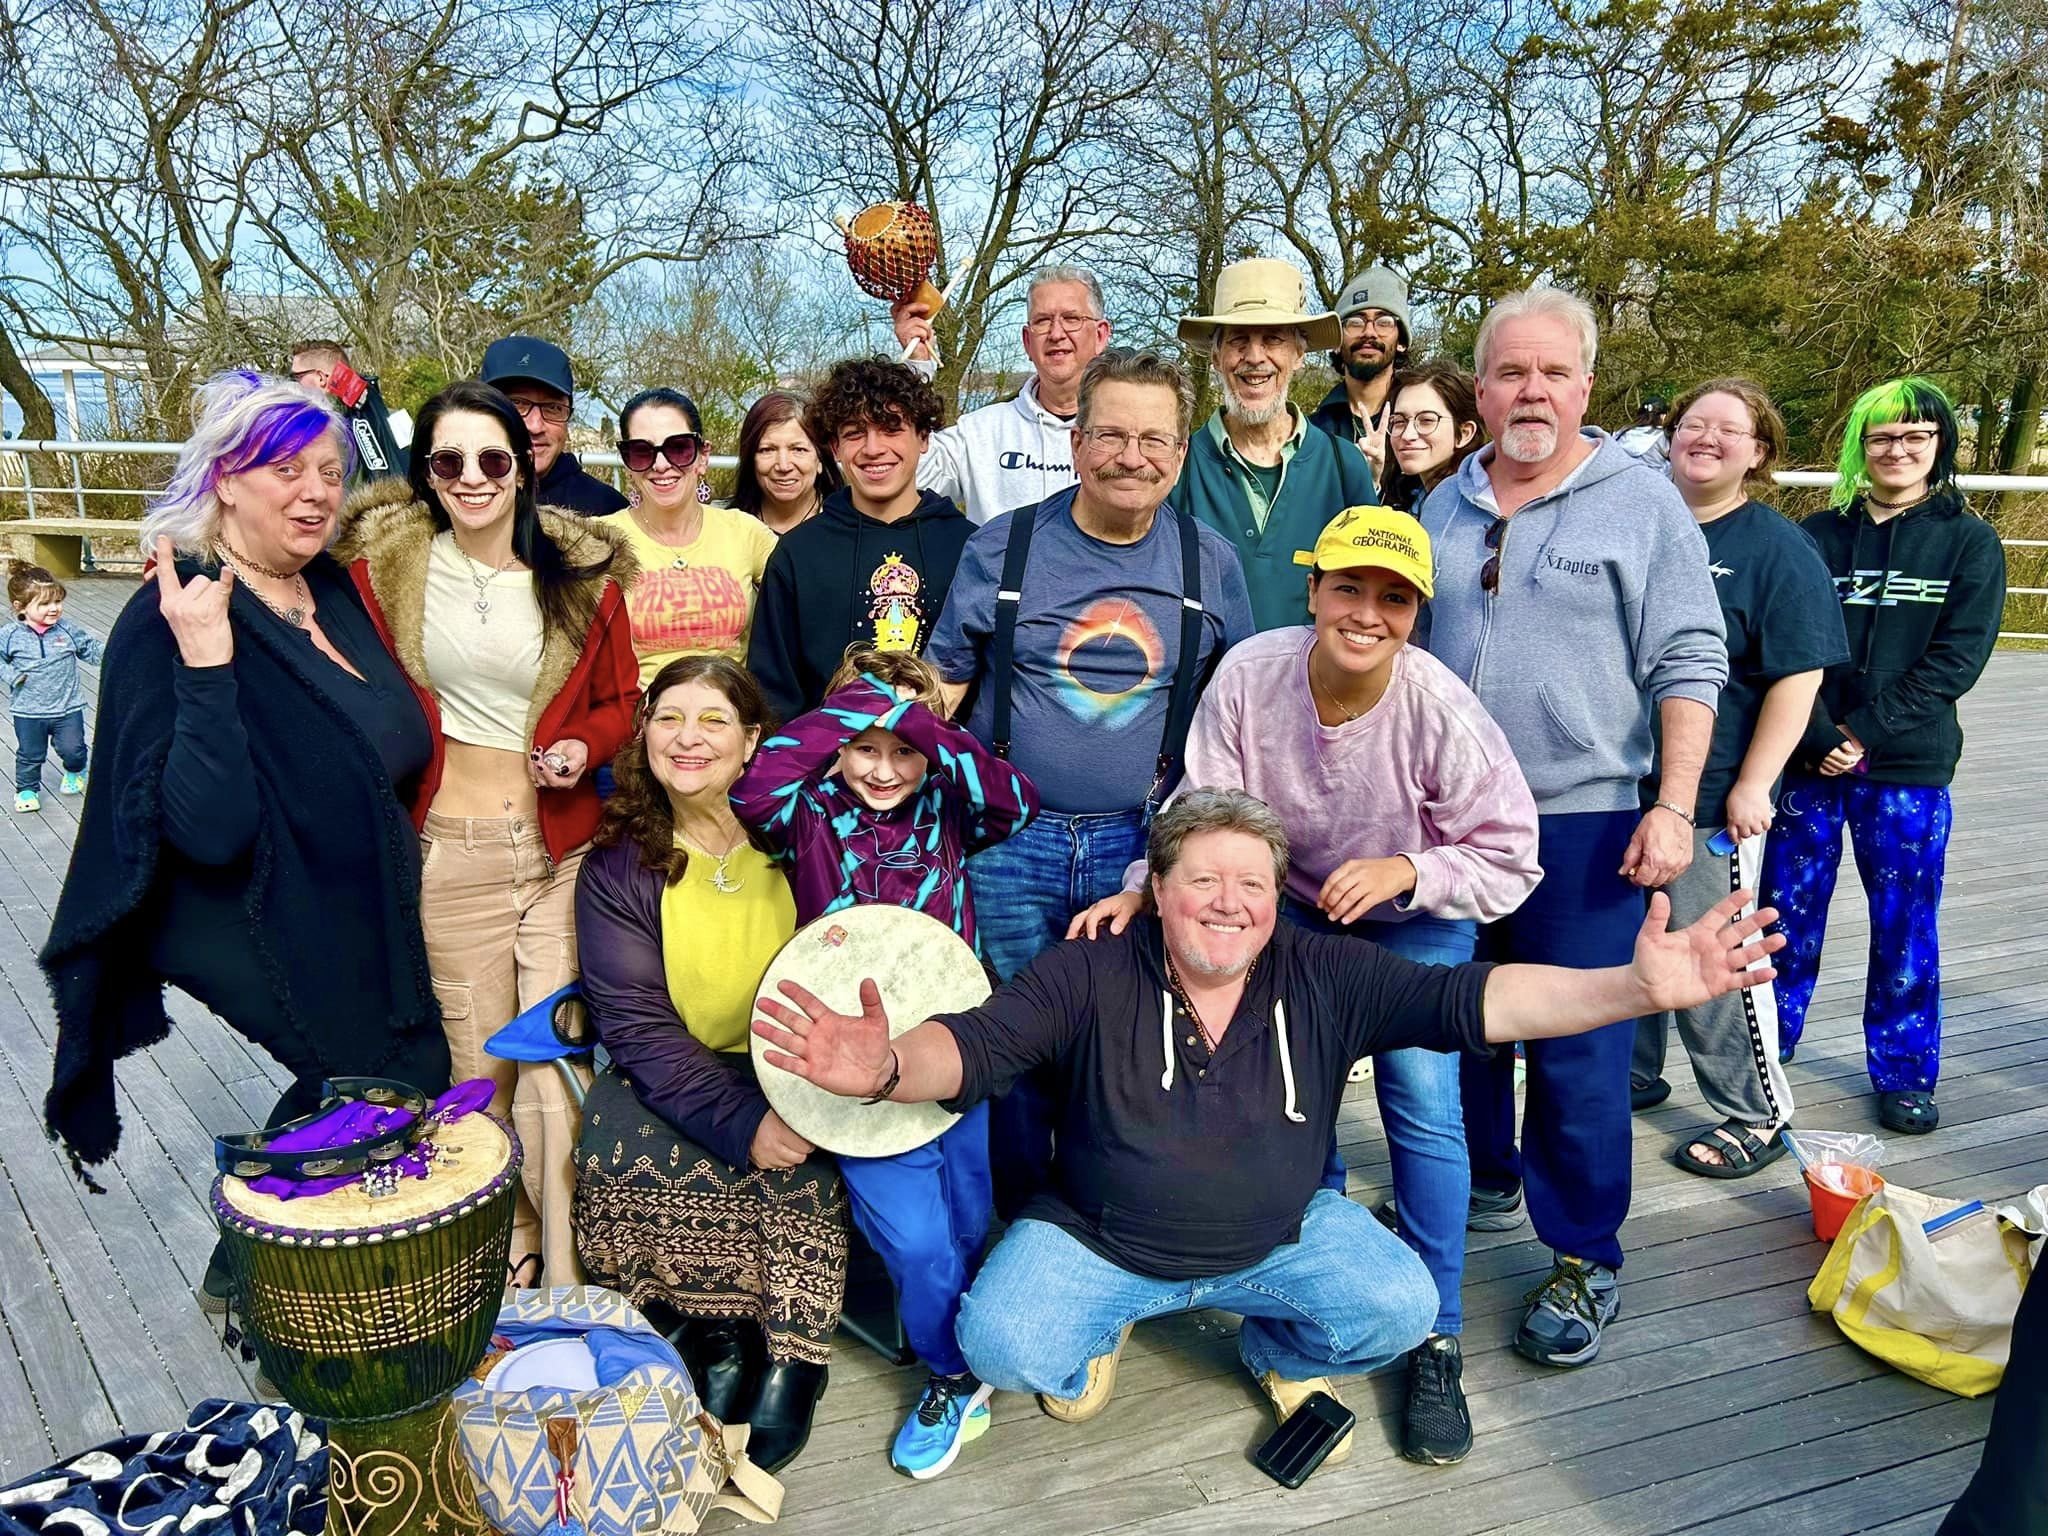 laura cerrano drum circle facilitator at sunken meadow state park long island NY solar eclipes gathering.jpeg